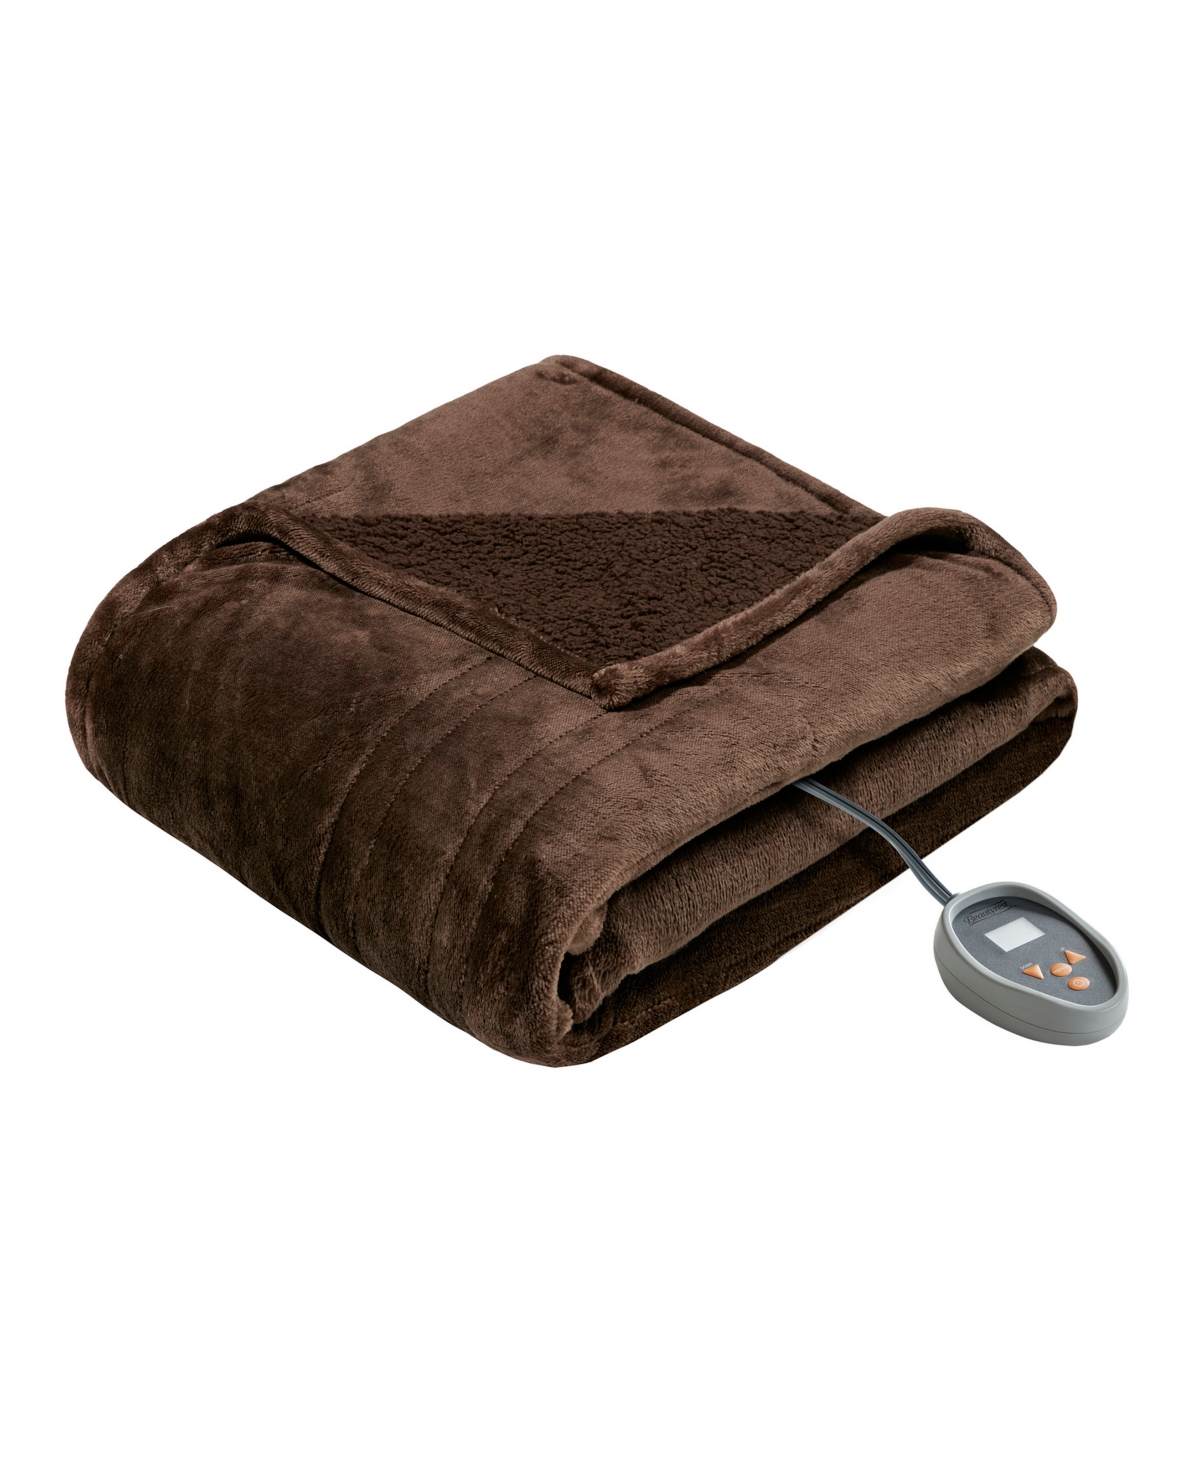 Beautyrest Microlight Berber Full Electric Blanket Bedding